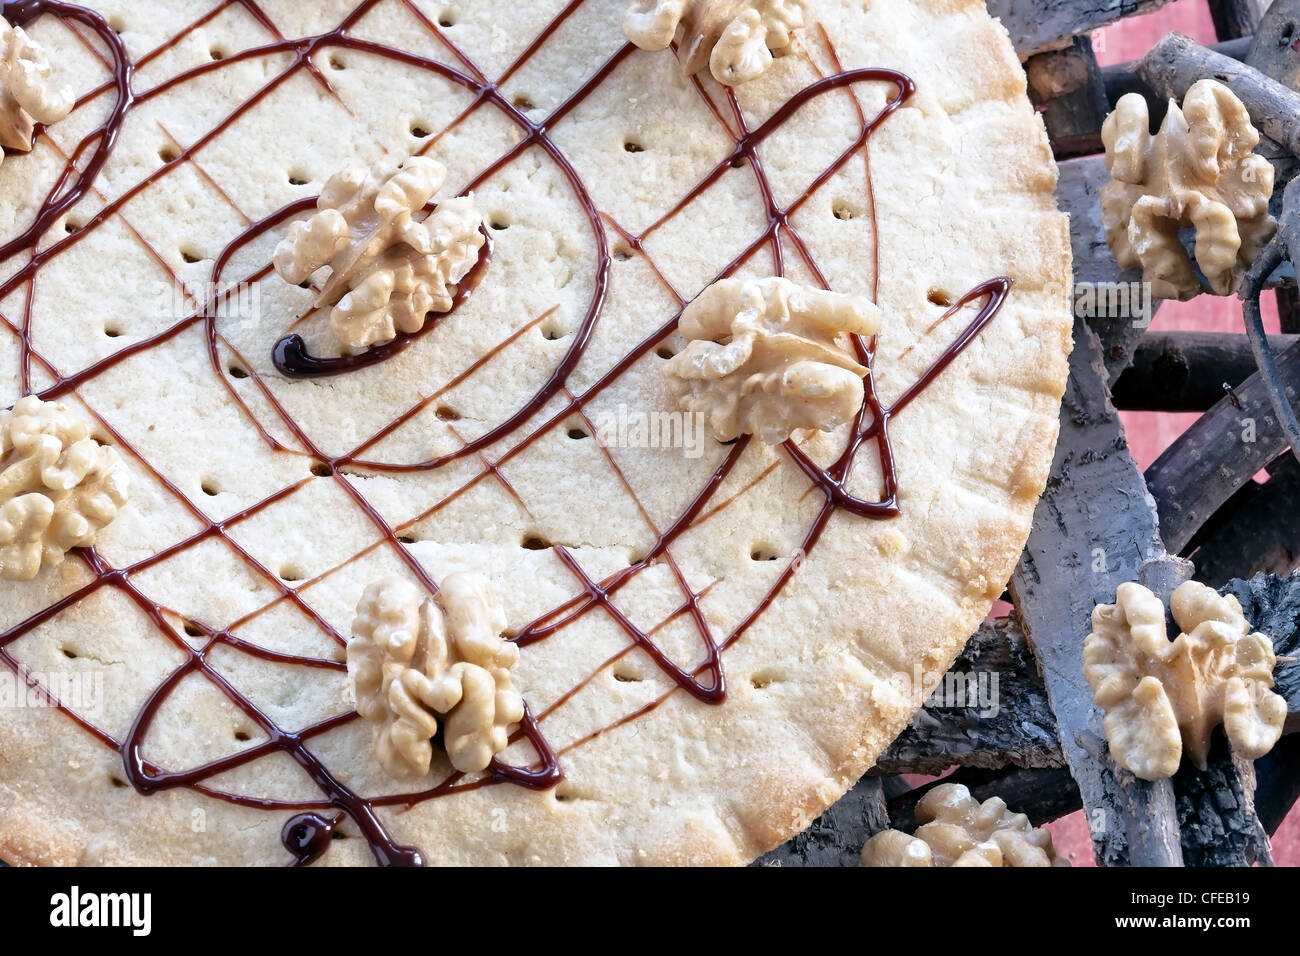 Engadine nut tart - pastry with caramel and walnuts Stock Photo